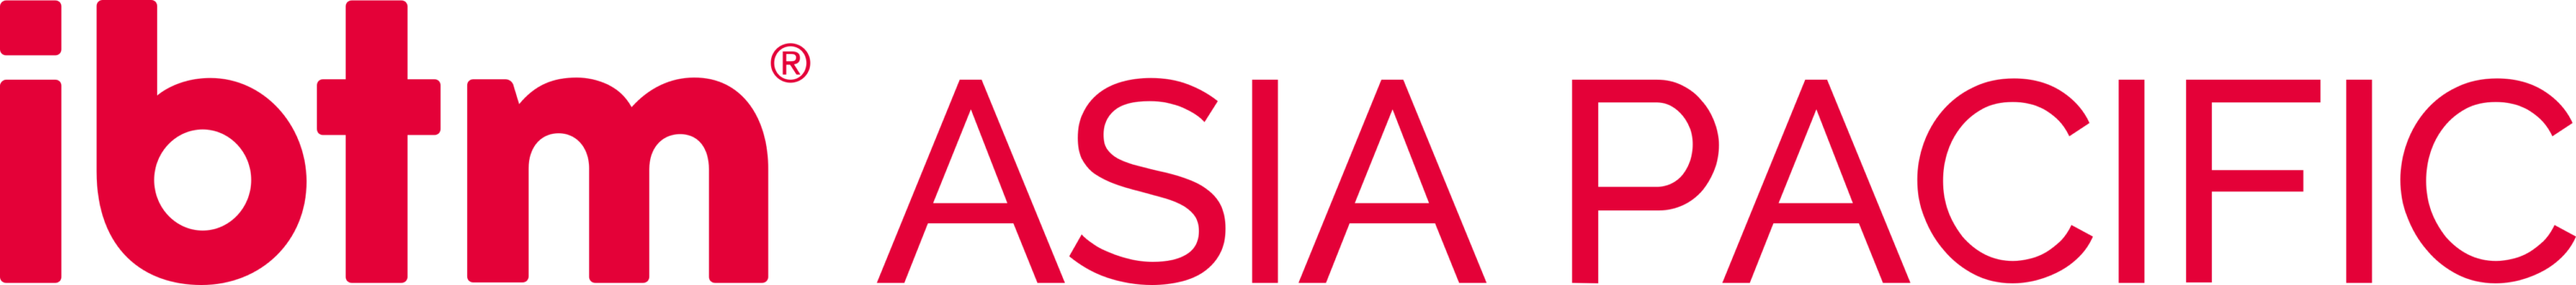 IBTM Asia Pacific Logo